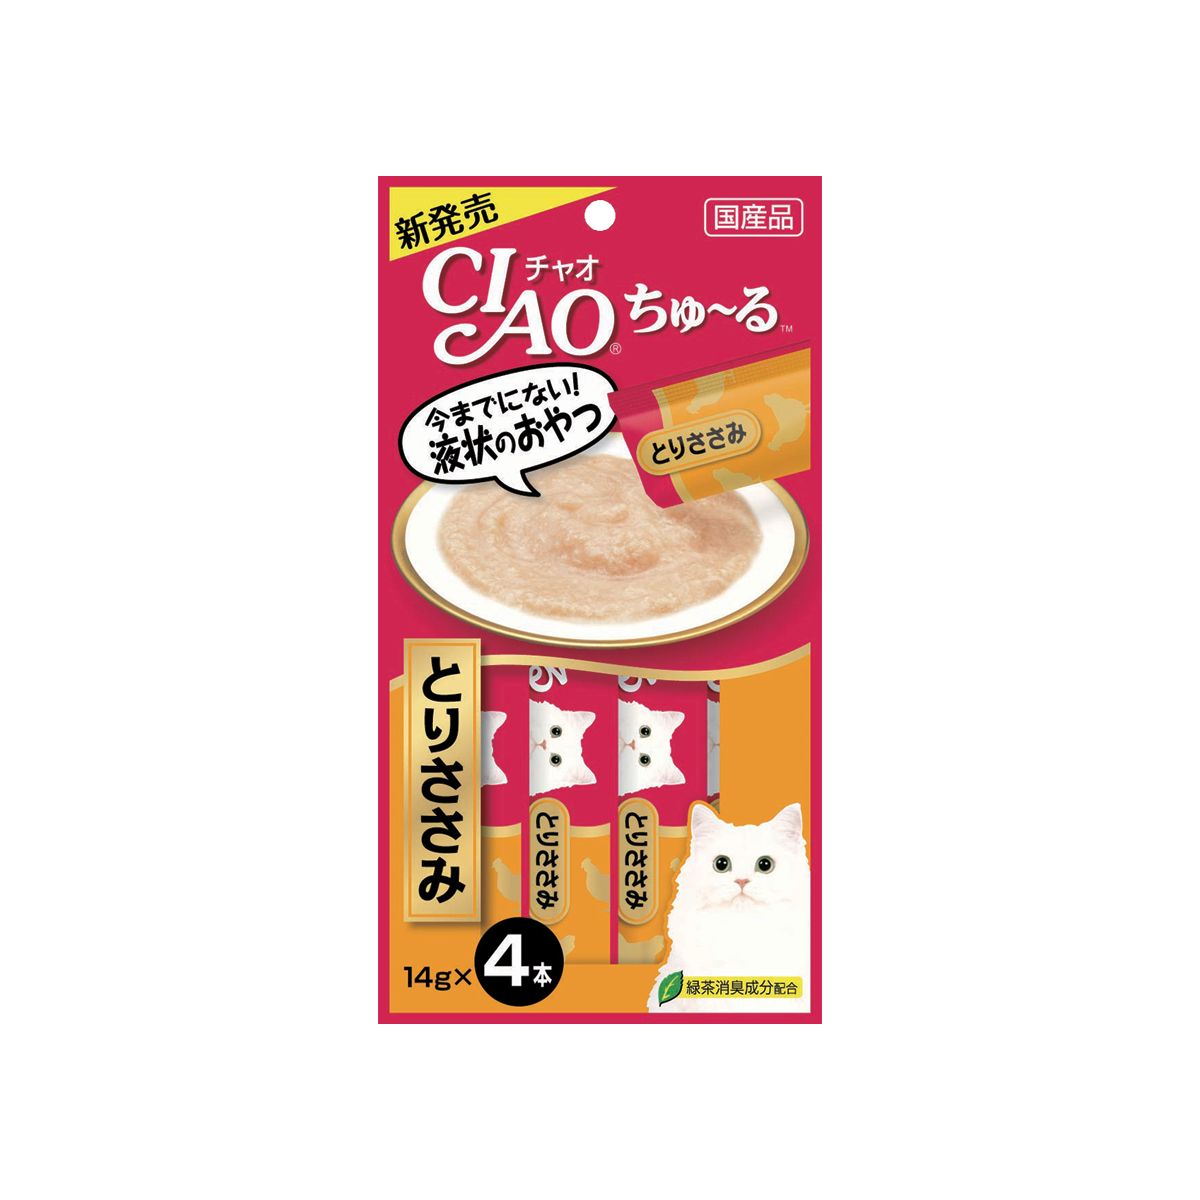 CIAO ChuRu Chicken Fillet Liquid Flavor เชาว์ ชูหรุ ขนมแมวครีมเลีย รสเนื้อสันในไก่ ขนาด 56 กรัม